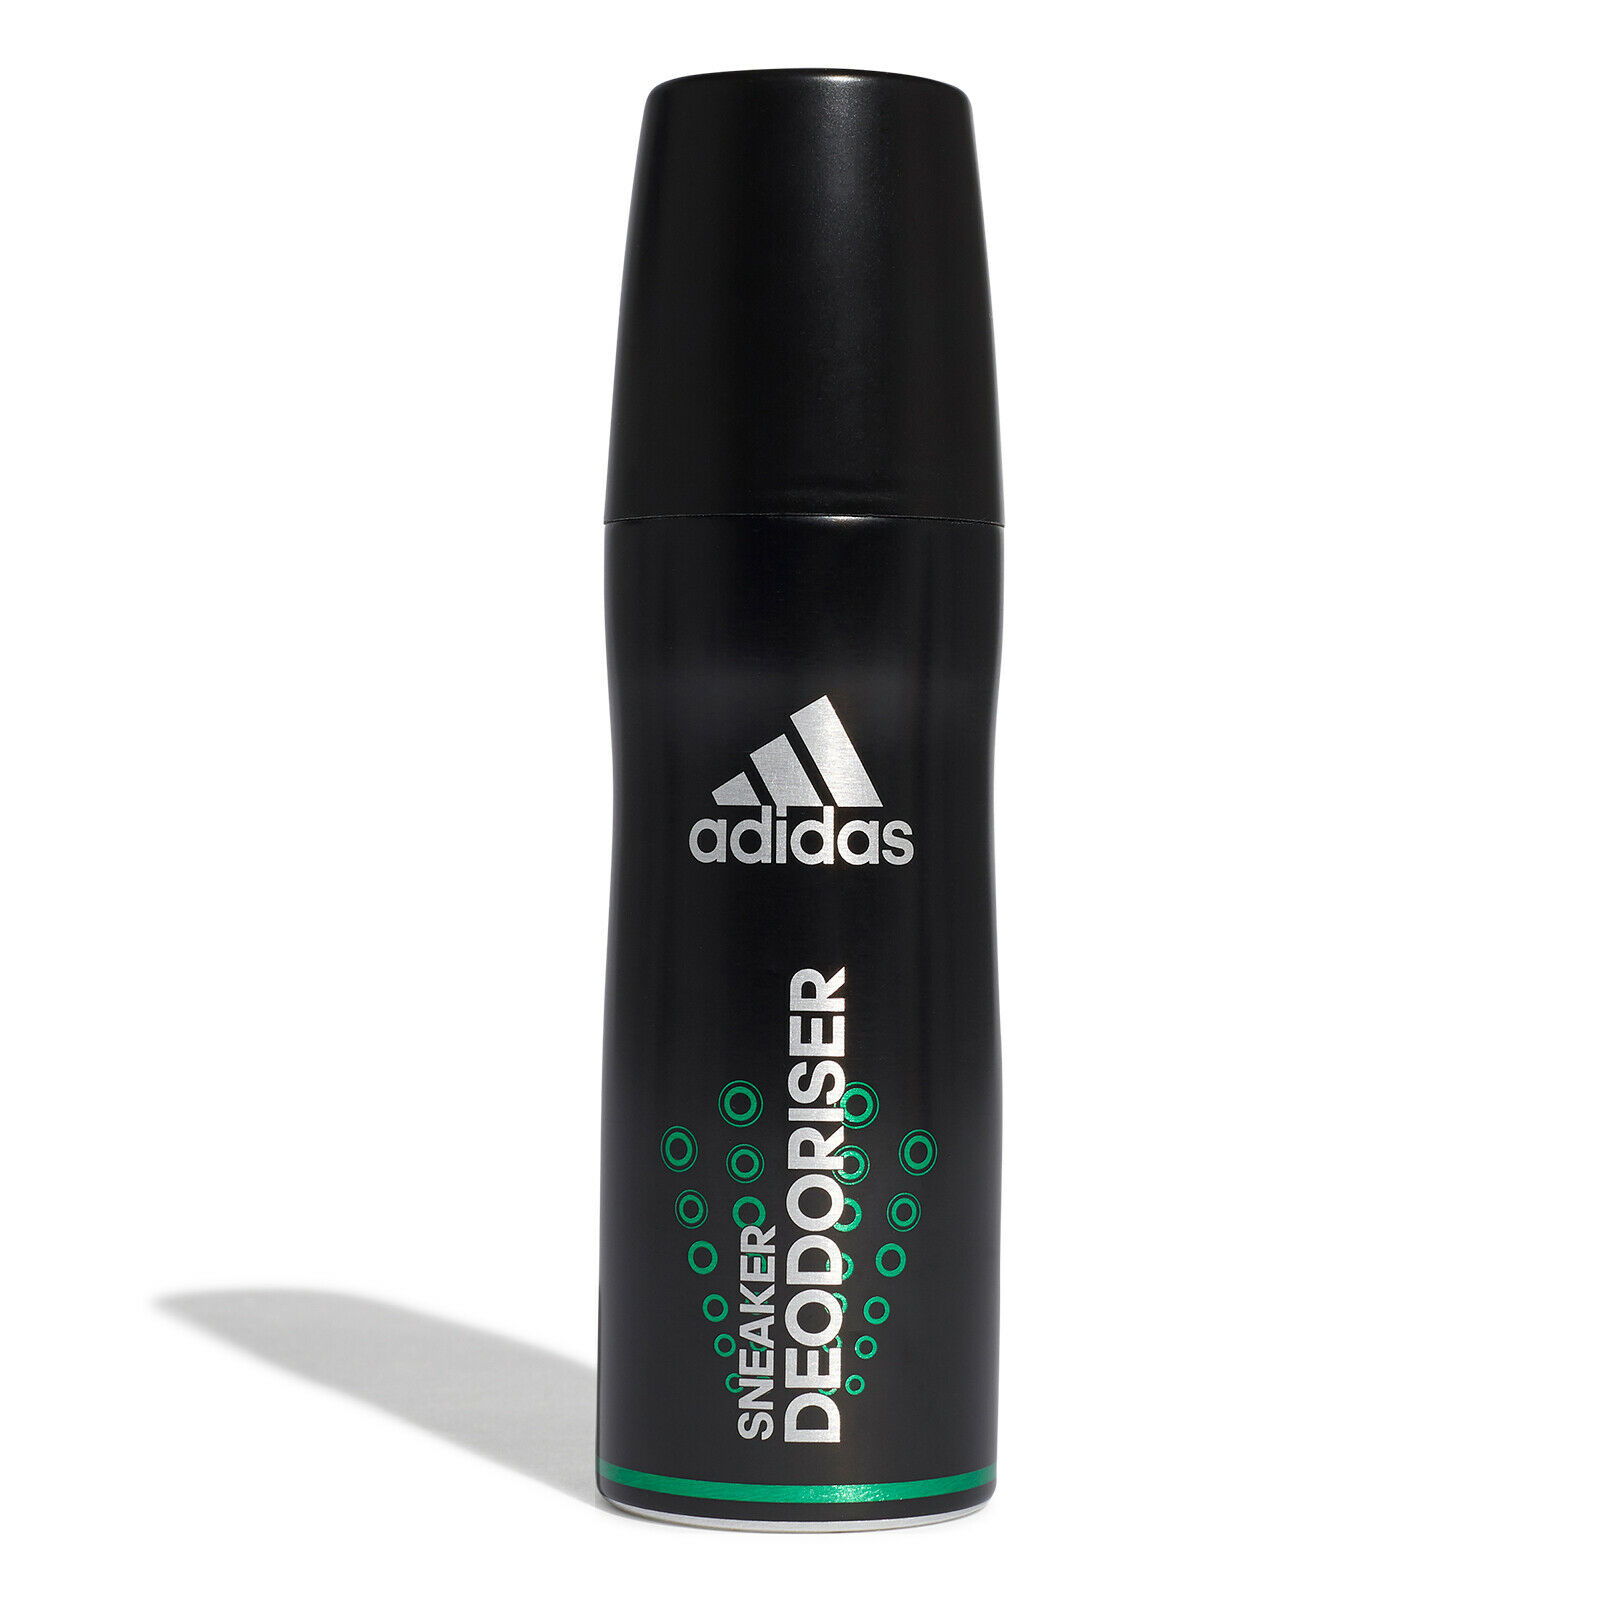 Adidas Sneaker and Shoe Deodorizer with Citrus Scent- Shoe Odor Eliminator -